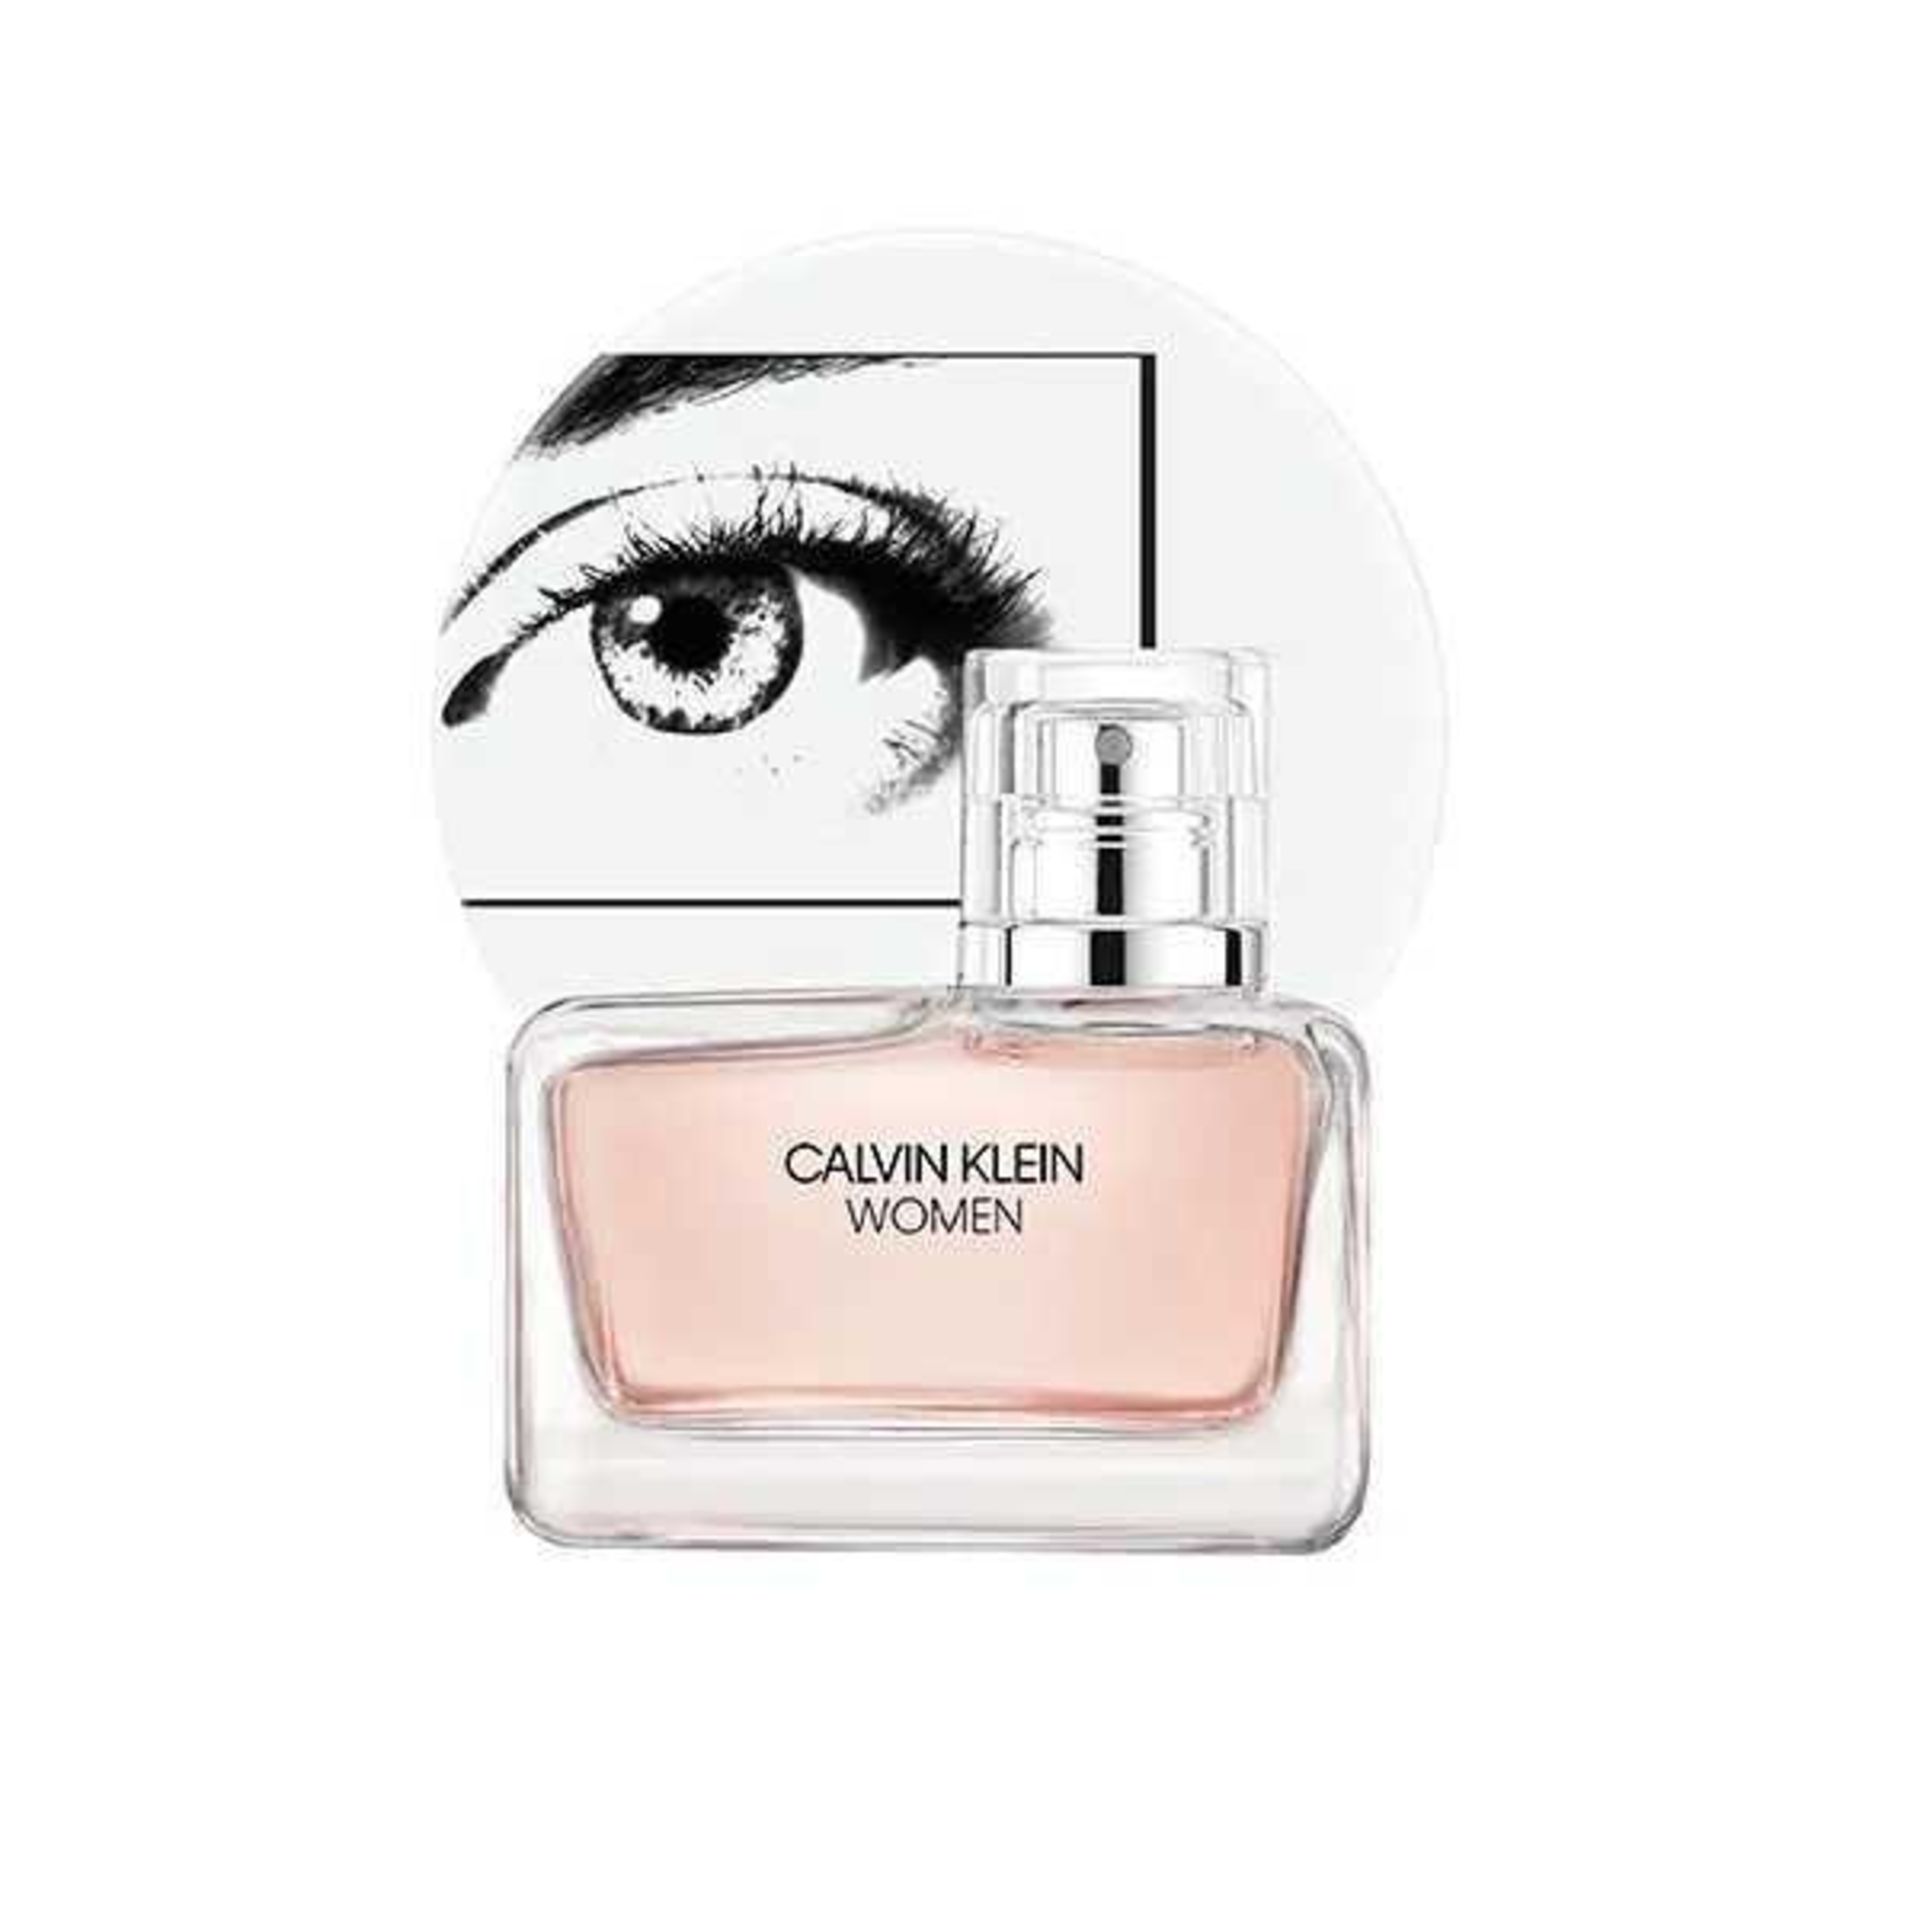 RRP £65 Brand New Boxed And Sealed Calvin Klein Women Perfume 50Ml Spray